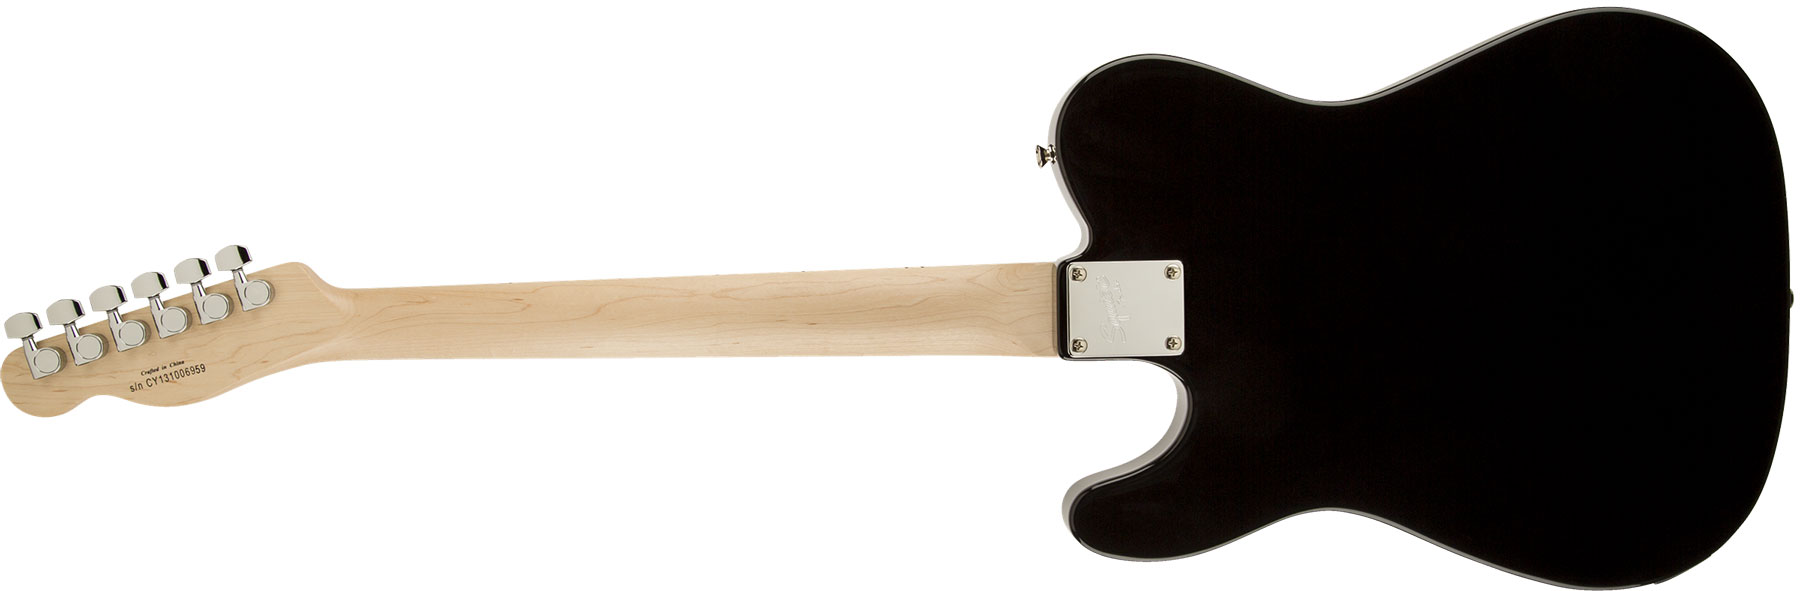 Squier Tele Affinity Series Mn - Black - Tel shape electric guitar - Variation 4